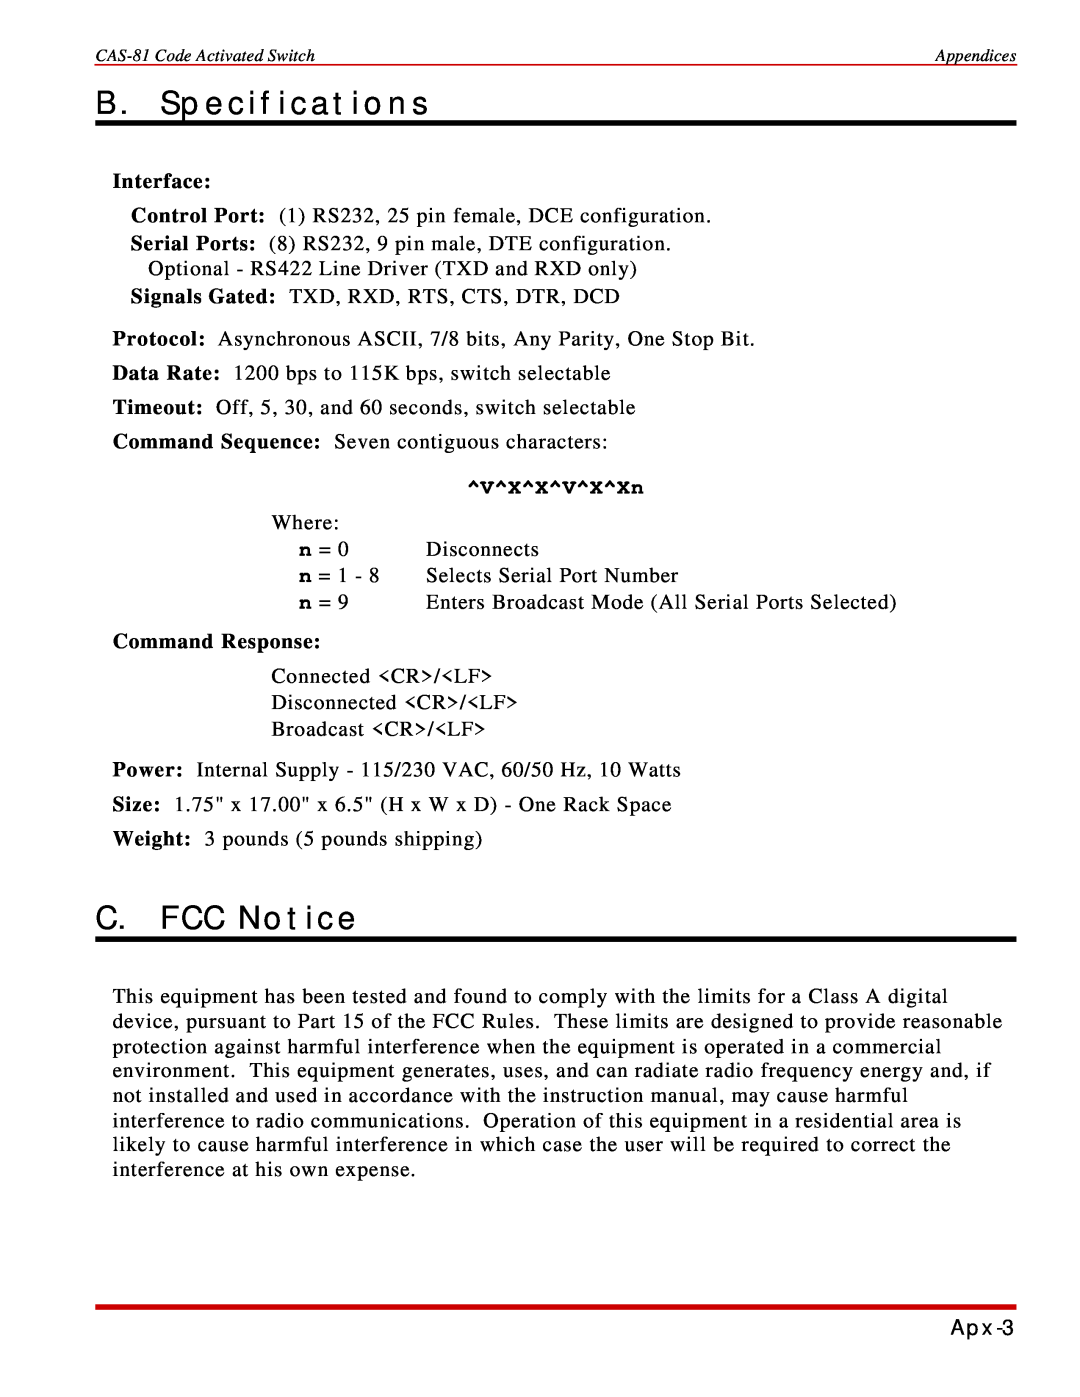 Western Telematic CAS-81 manual B. Specifications, C. FCC Notice, VXXVXXn, Apx-3 